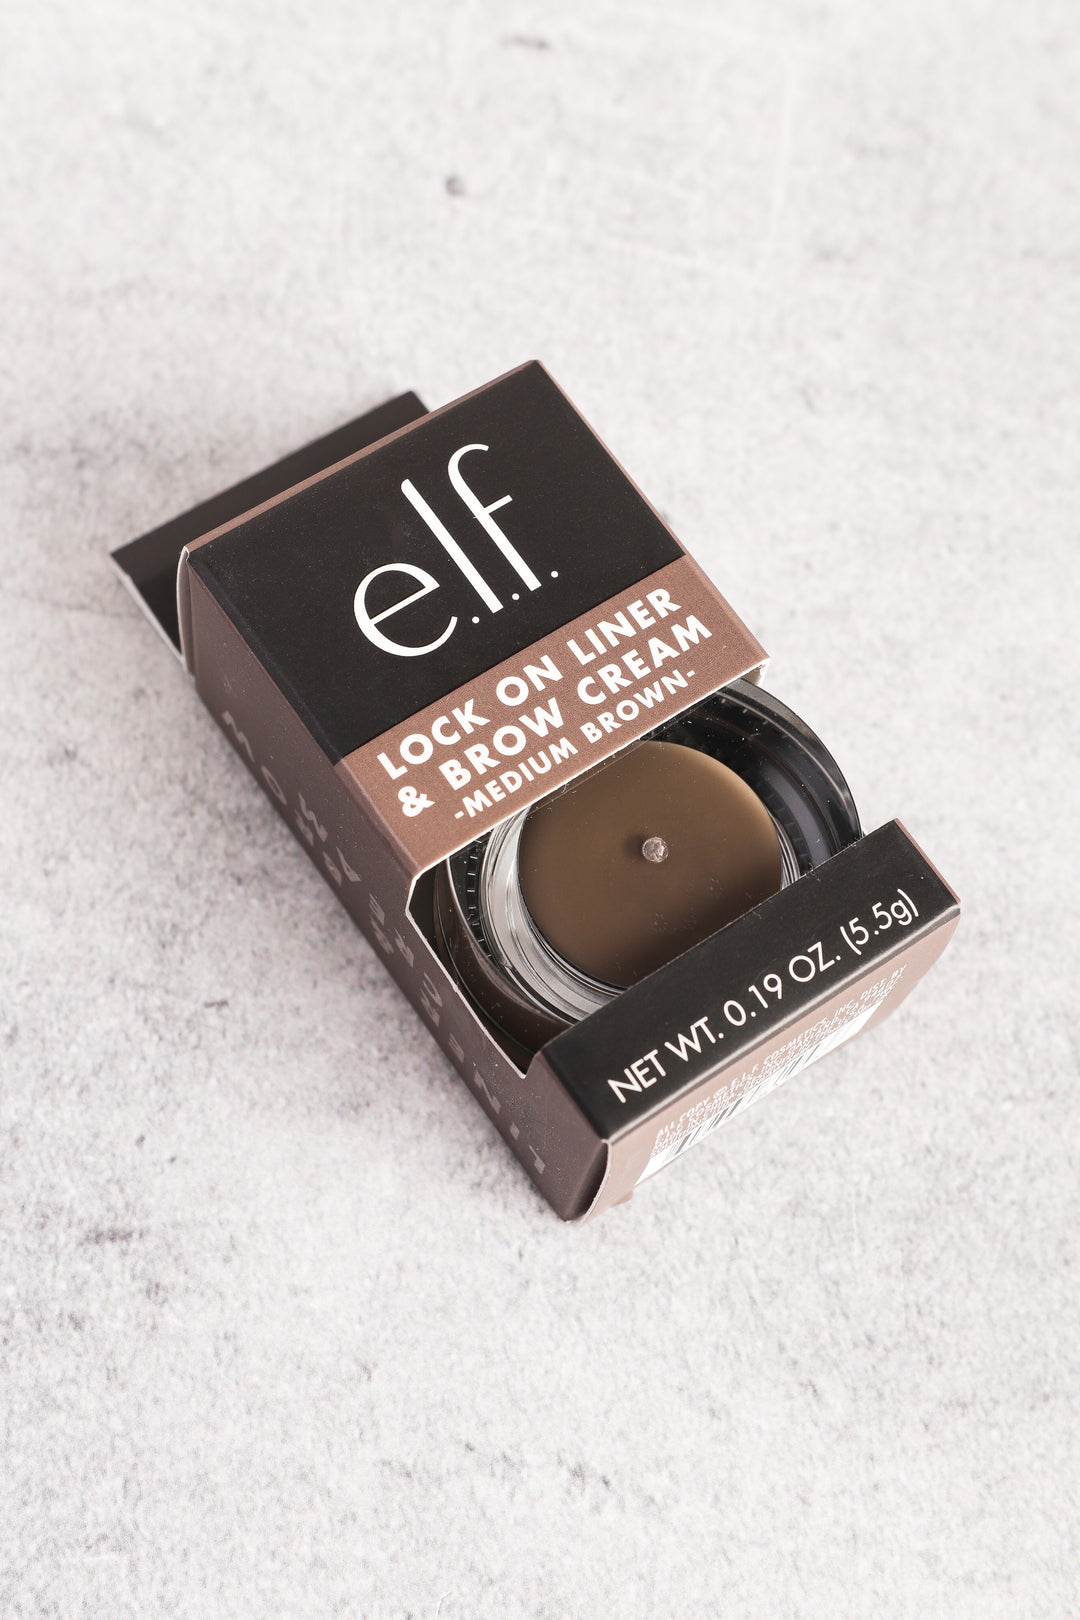 Elf Lock On Liner and Brow Cream - Pomada para Cejas